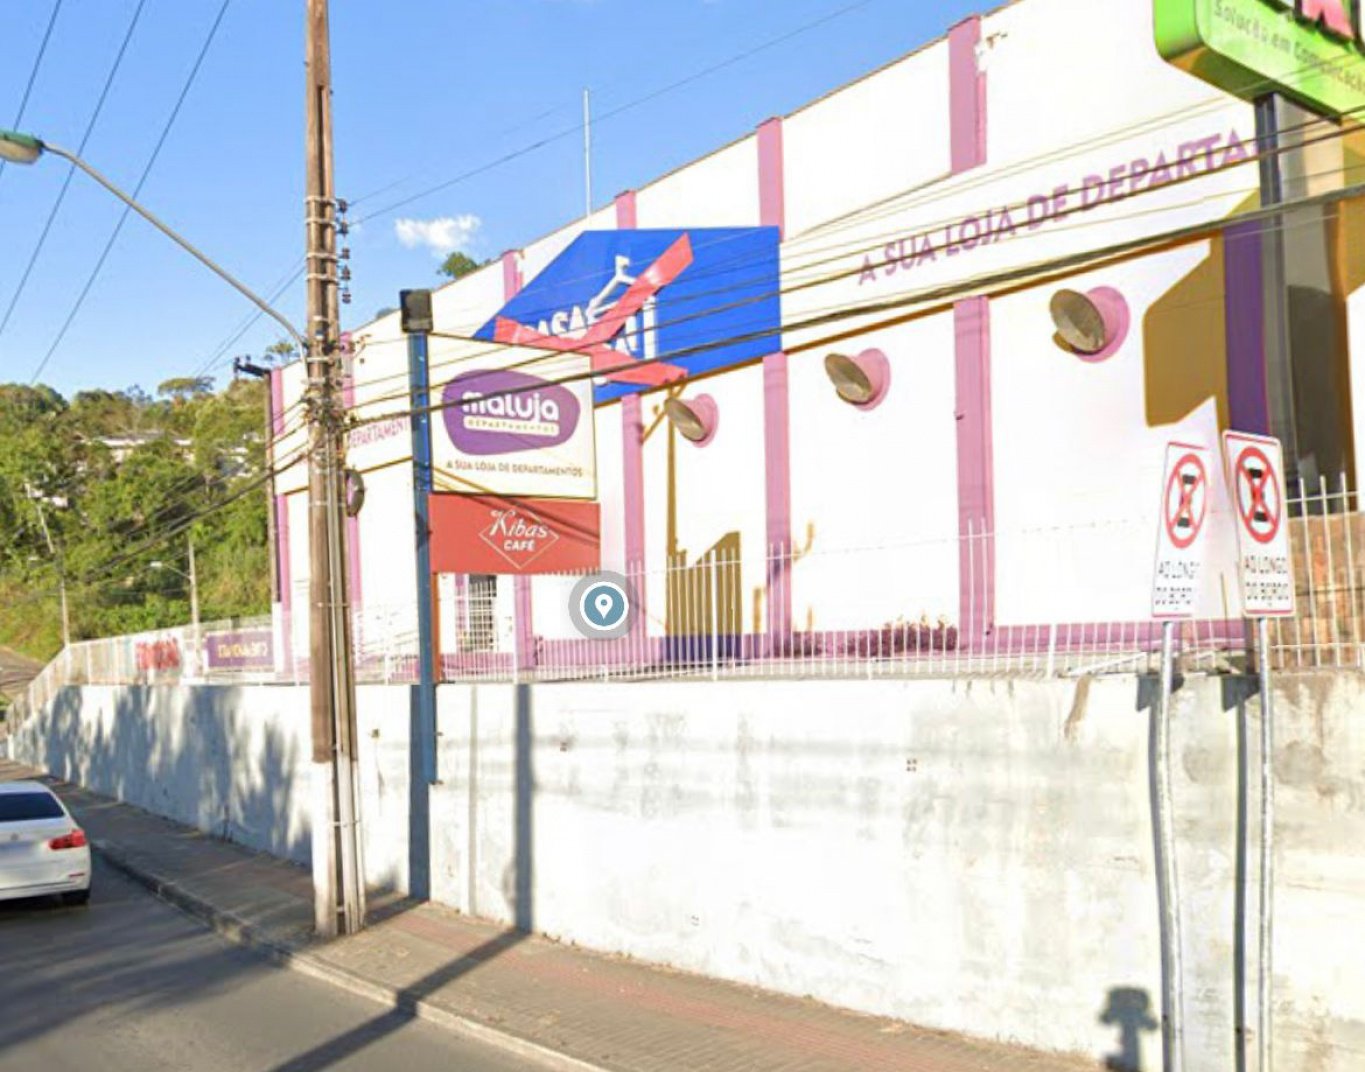 Sala Comercial no Bairro Garcia, aluguel blumenau, dinamica sul, imobiliaria em blumenau, bairro garcia, apartamento para alugar